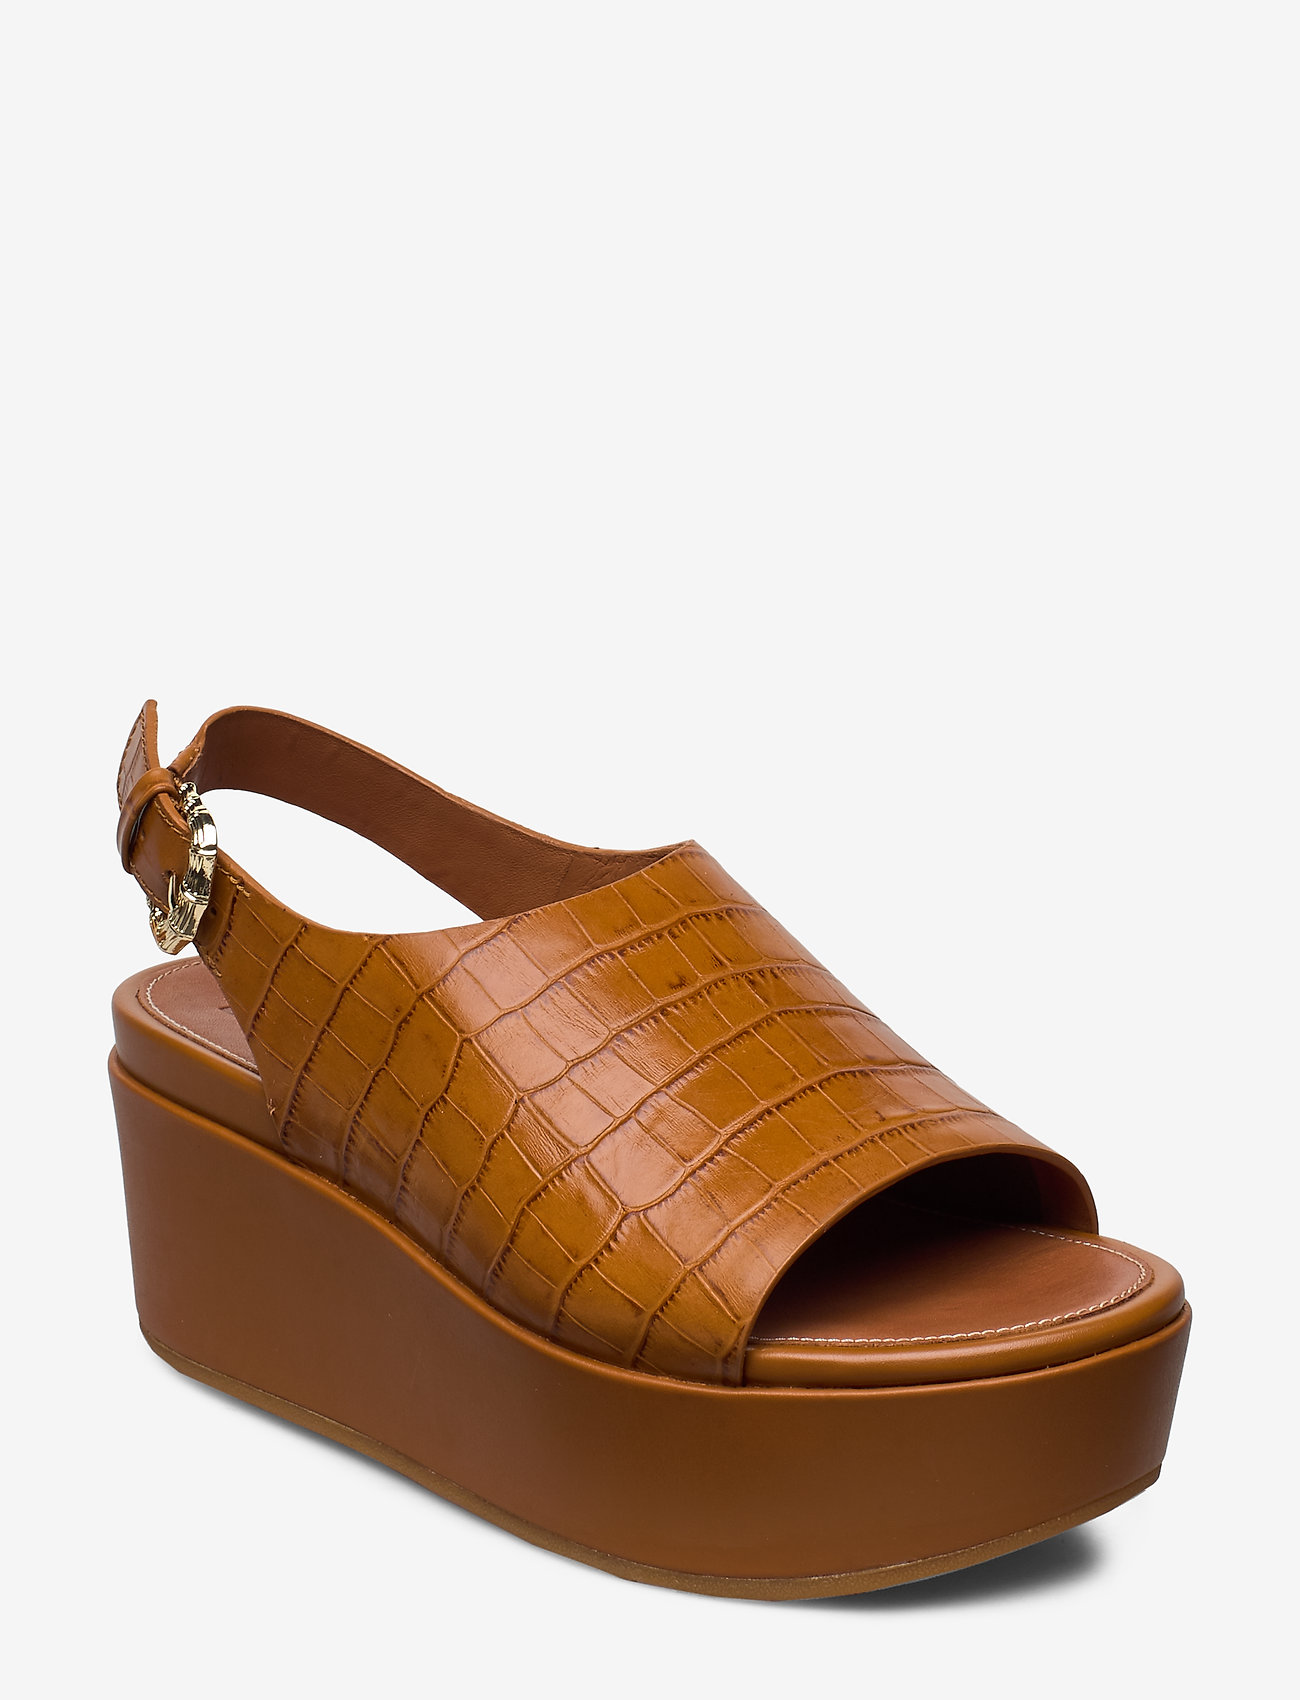 crocs sandals with backstrap